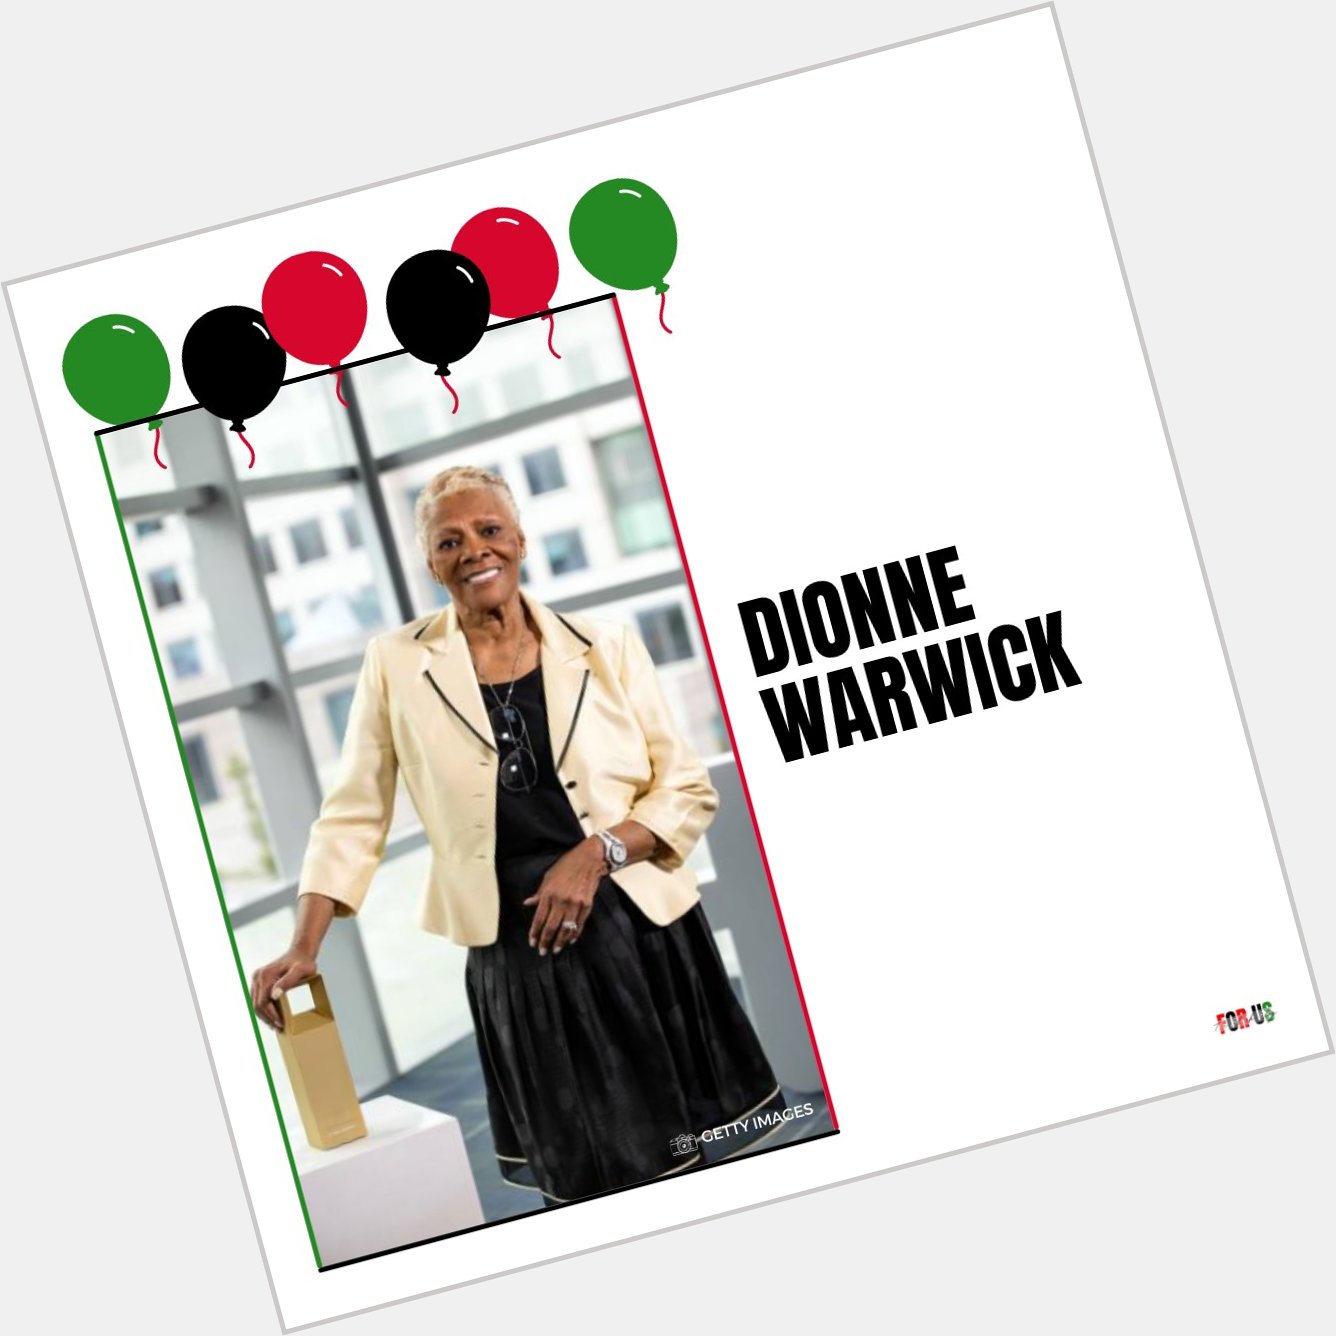 Join us in wishing Dionne Warwick, Happy Birthday 